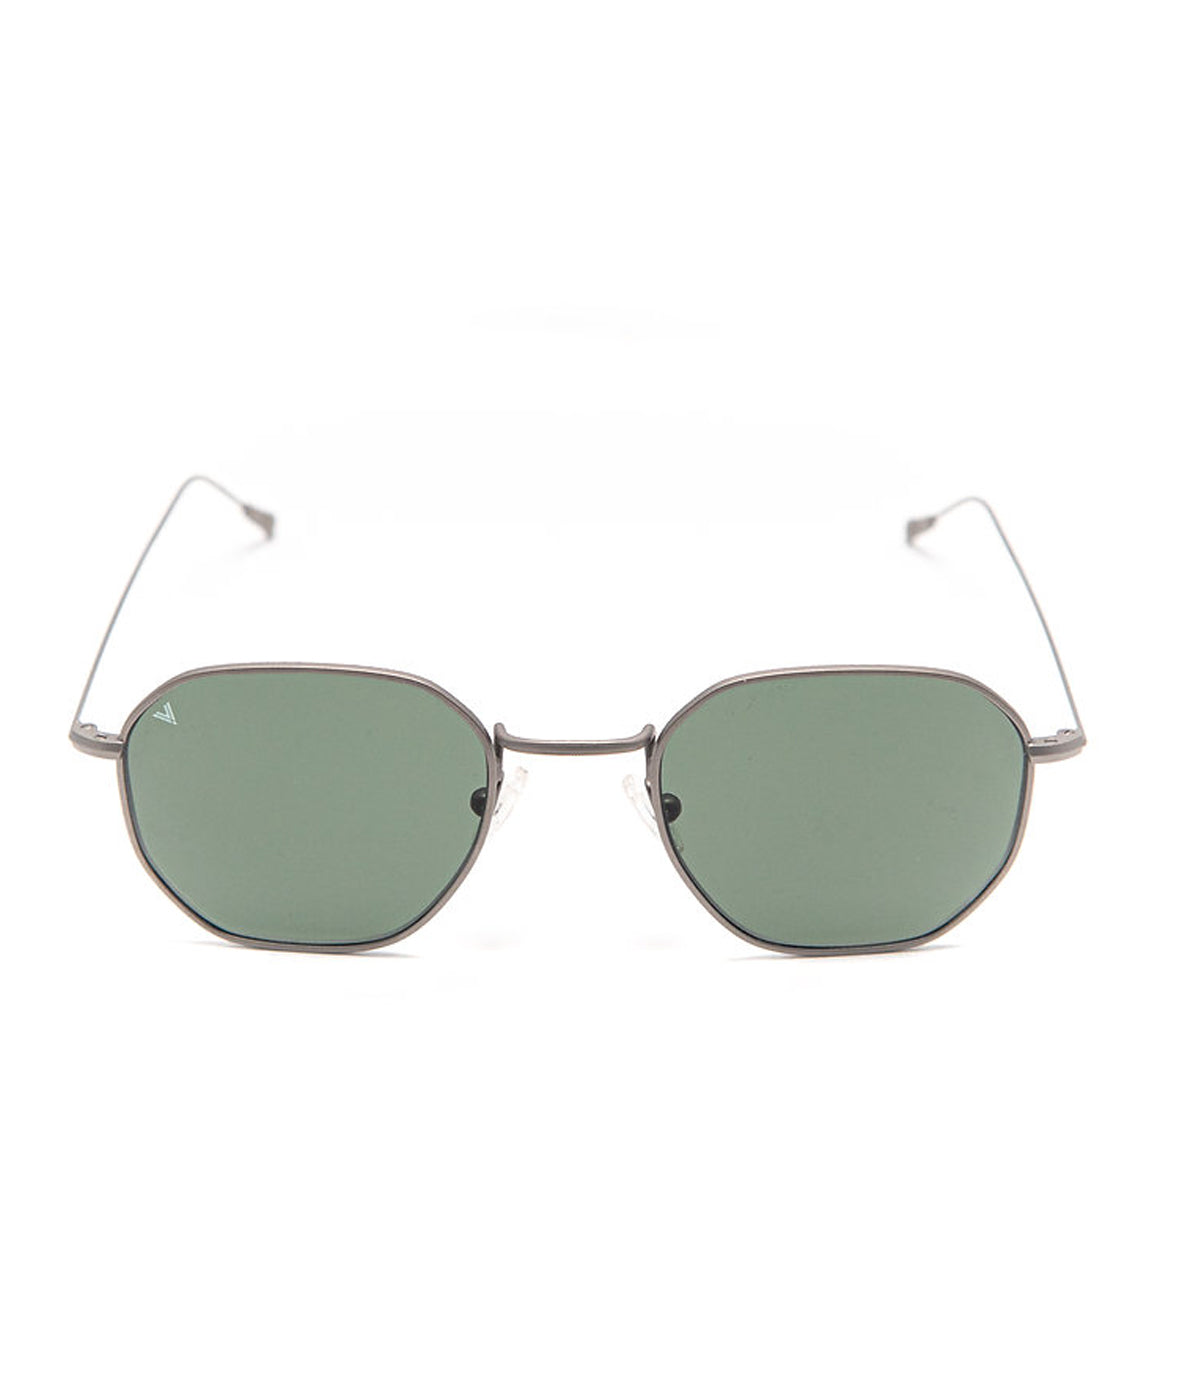 Karl Sunglasses in Silver